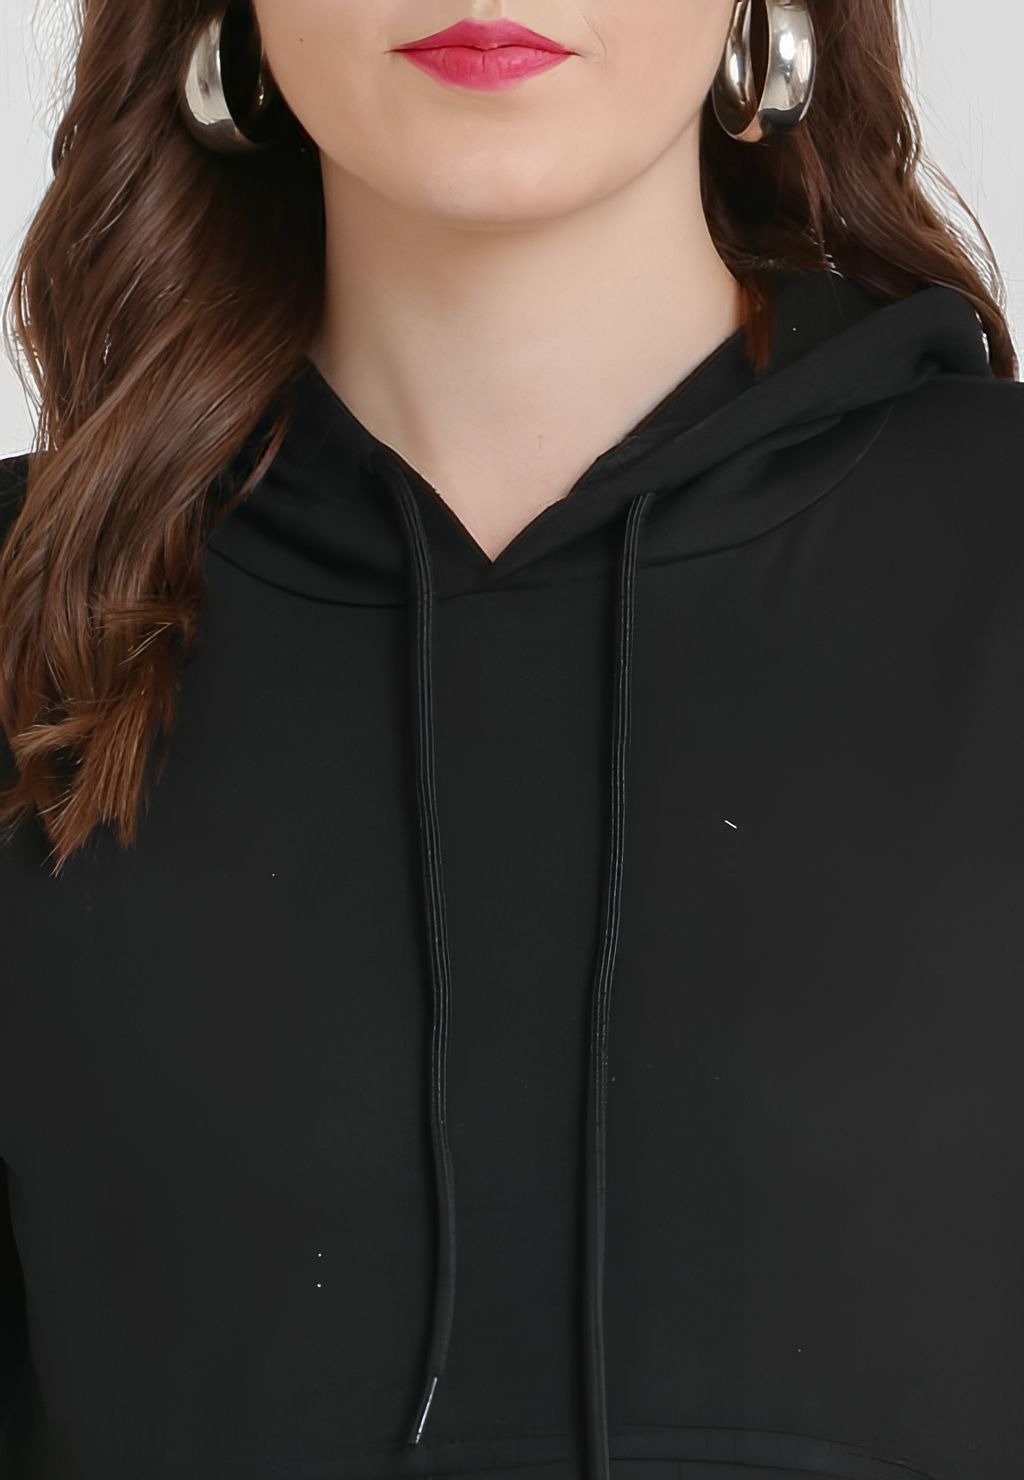 Cute Sweatshirt - Black, XS, Free